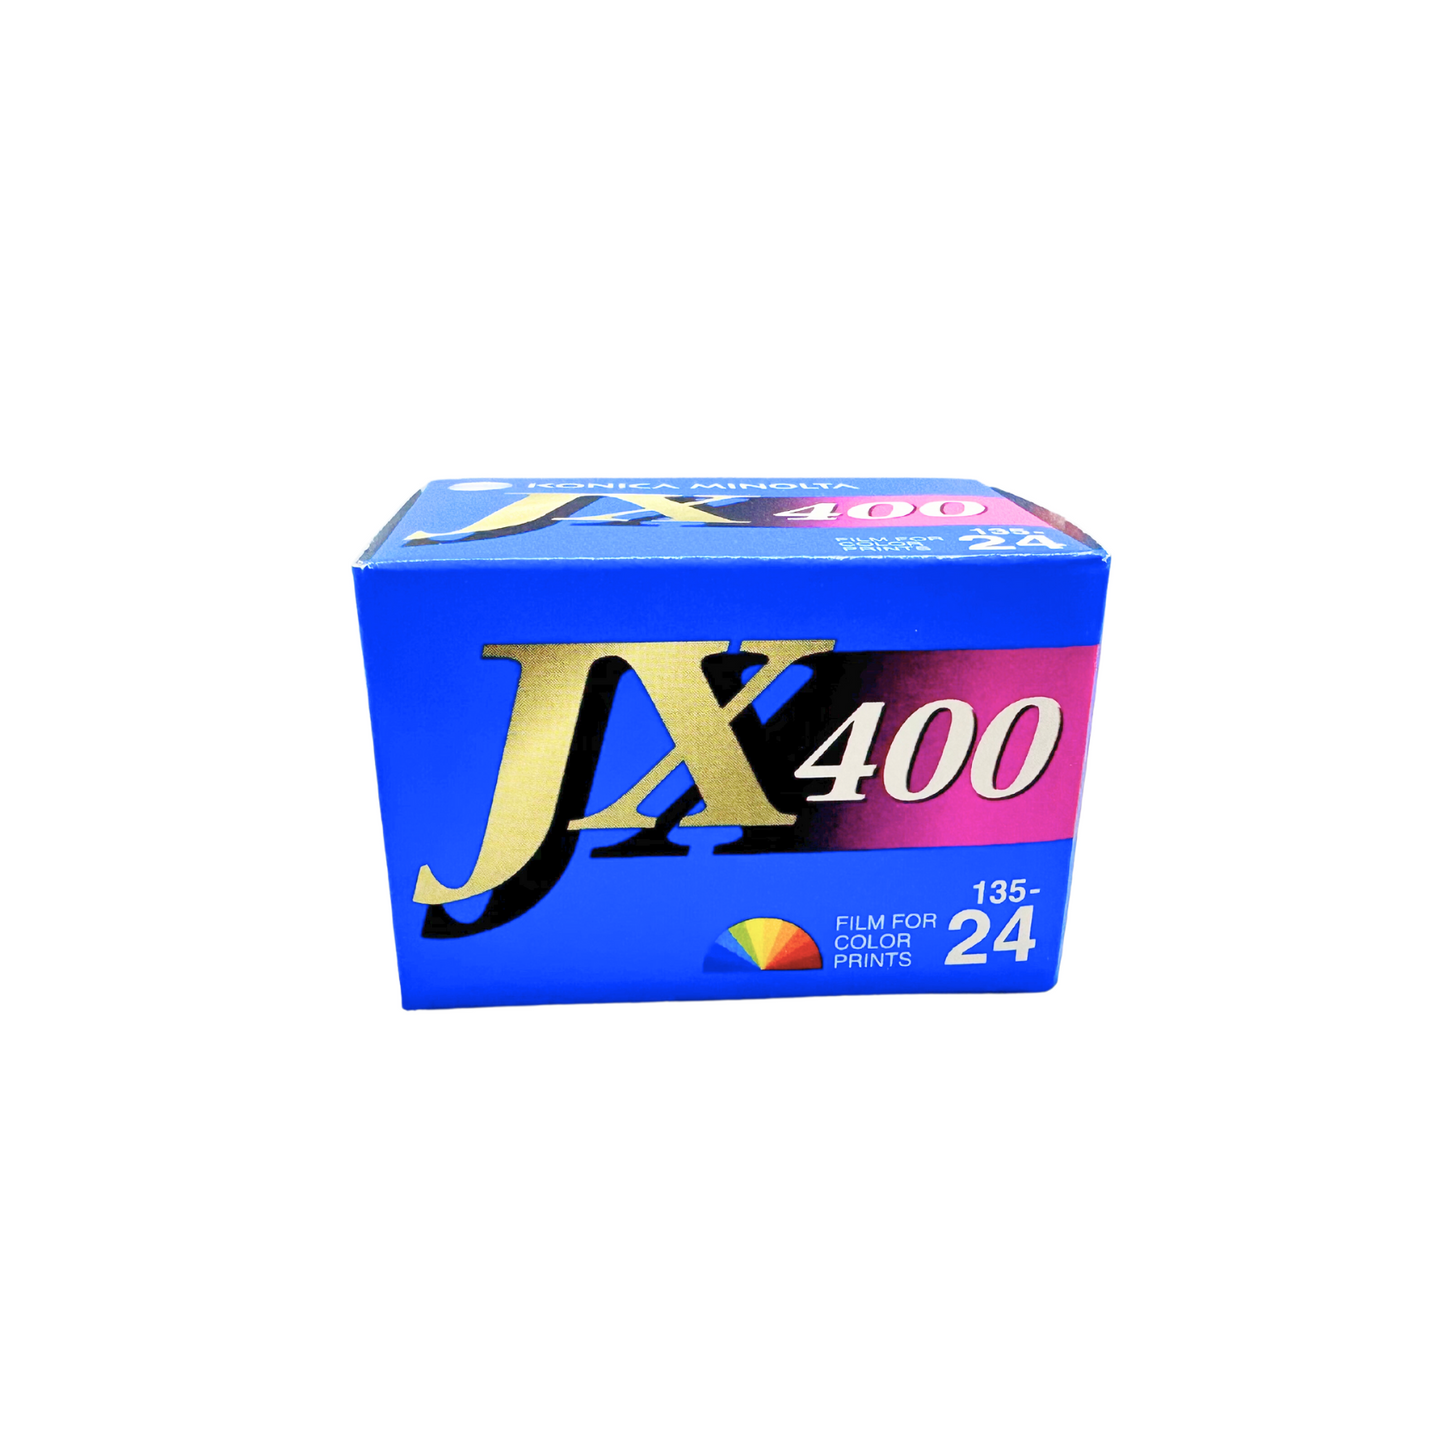 Konica JX400 24exp Expired Film (2006/07)